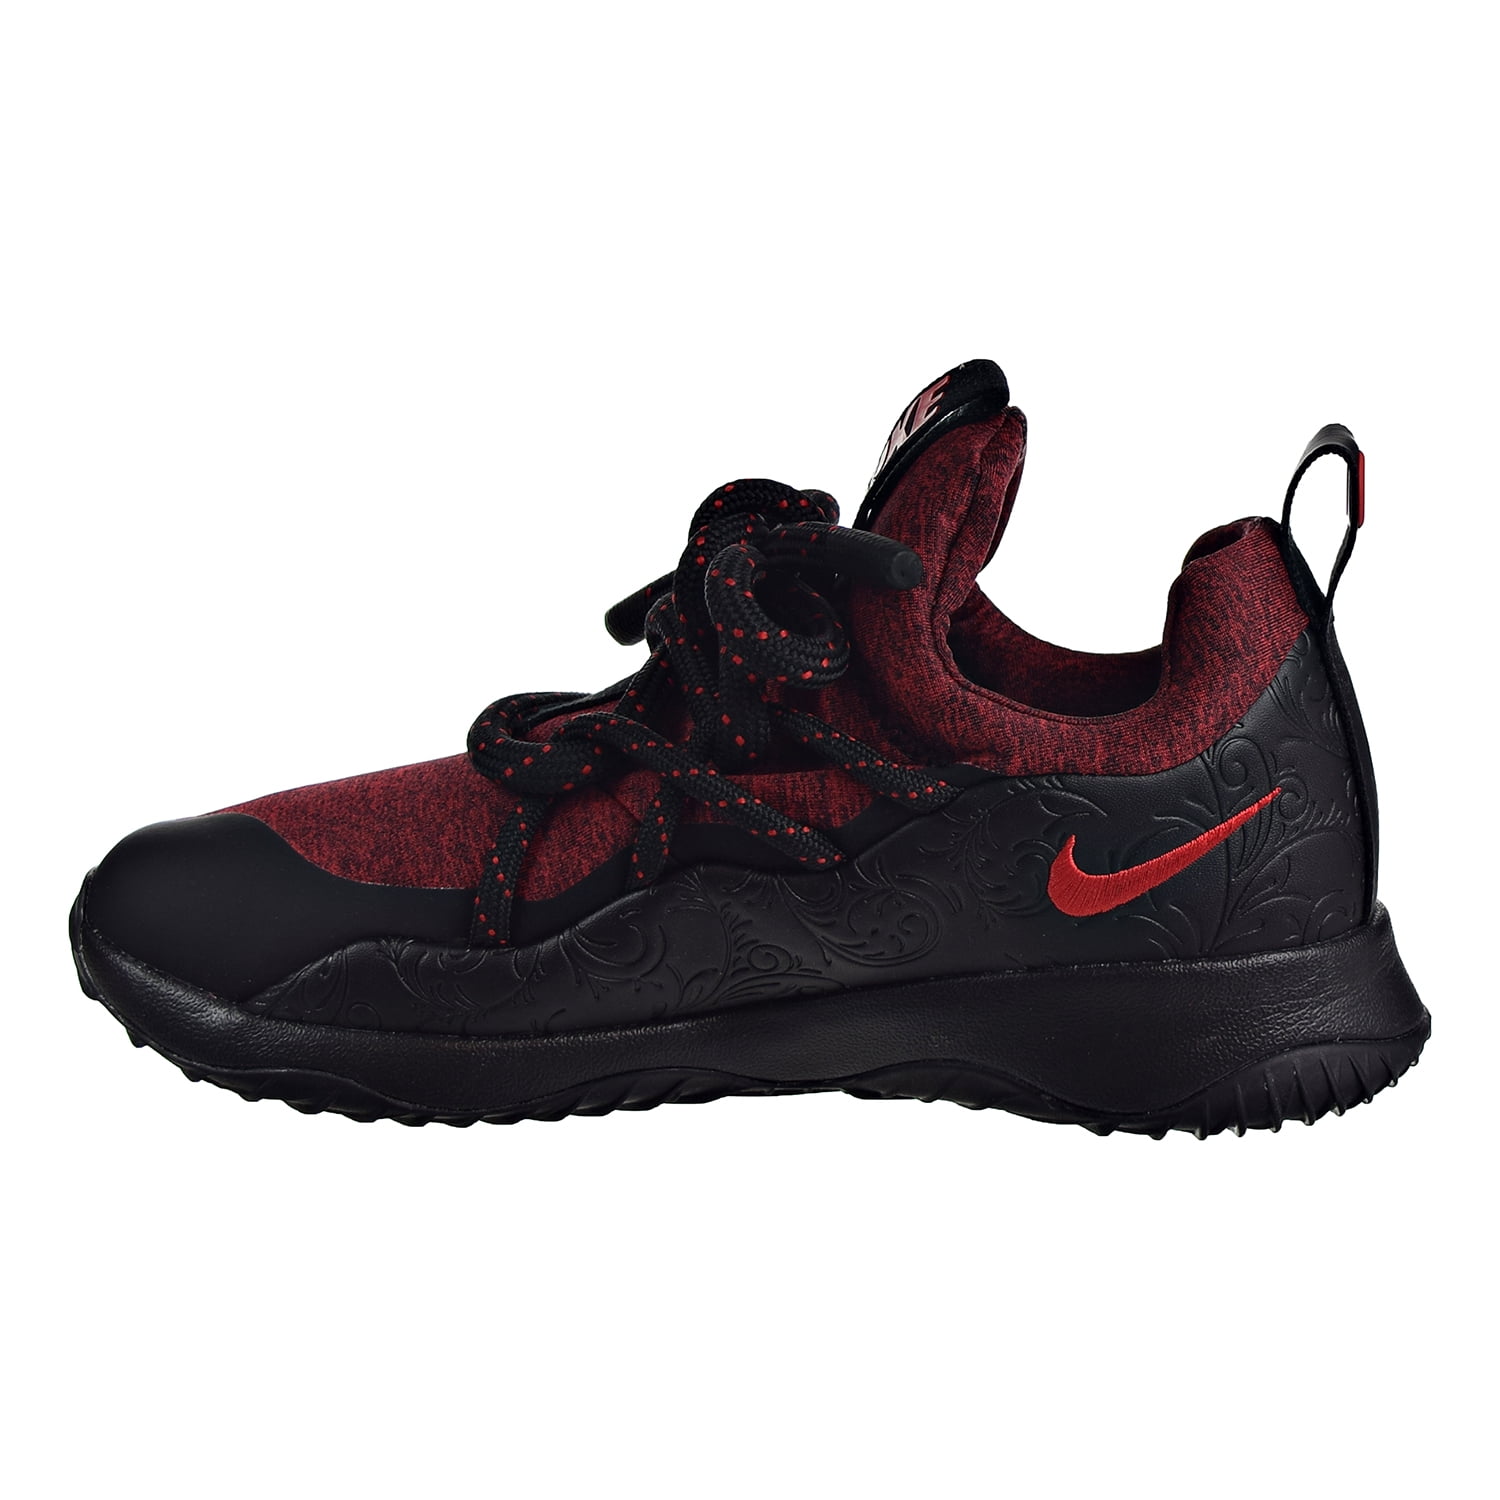 Nike Floral Women's Shoes Black/University Red aj1694-001 - Walmart.com